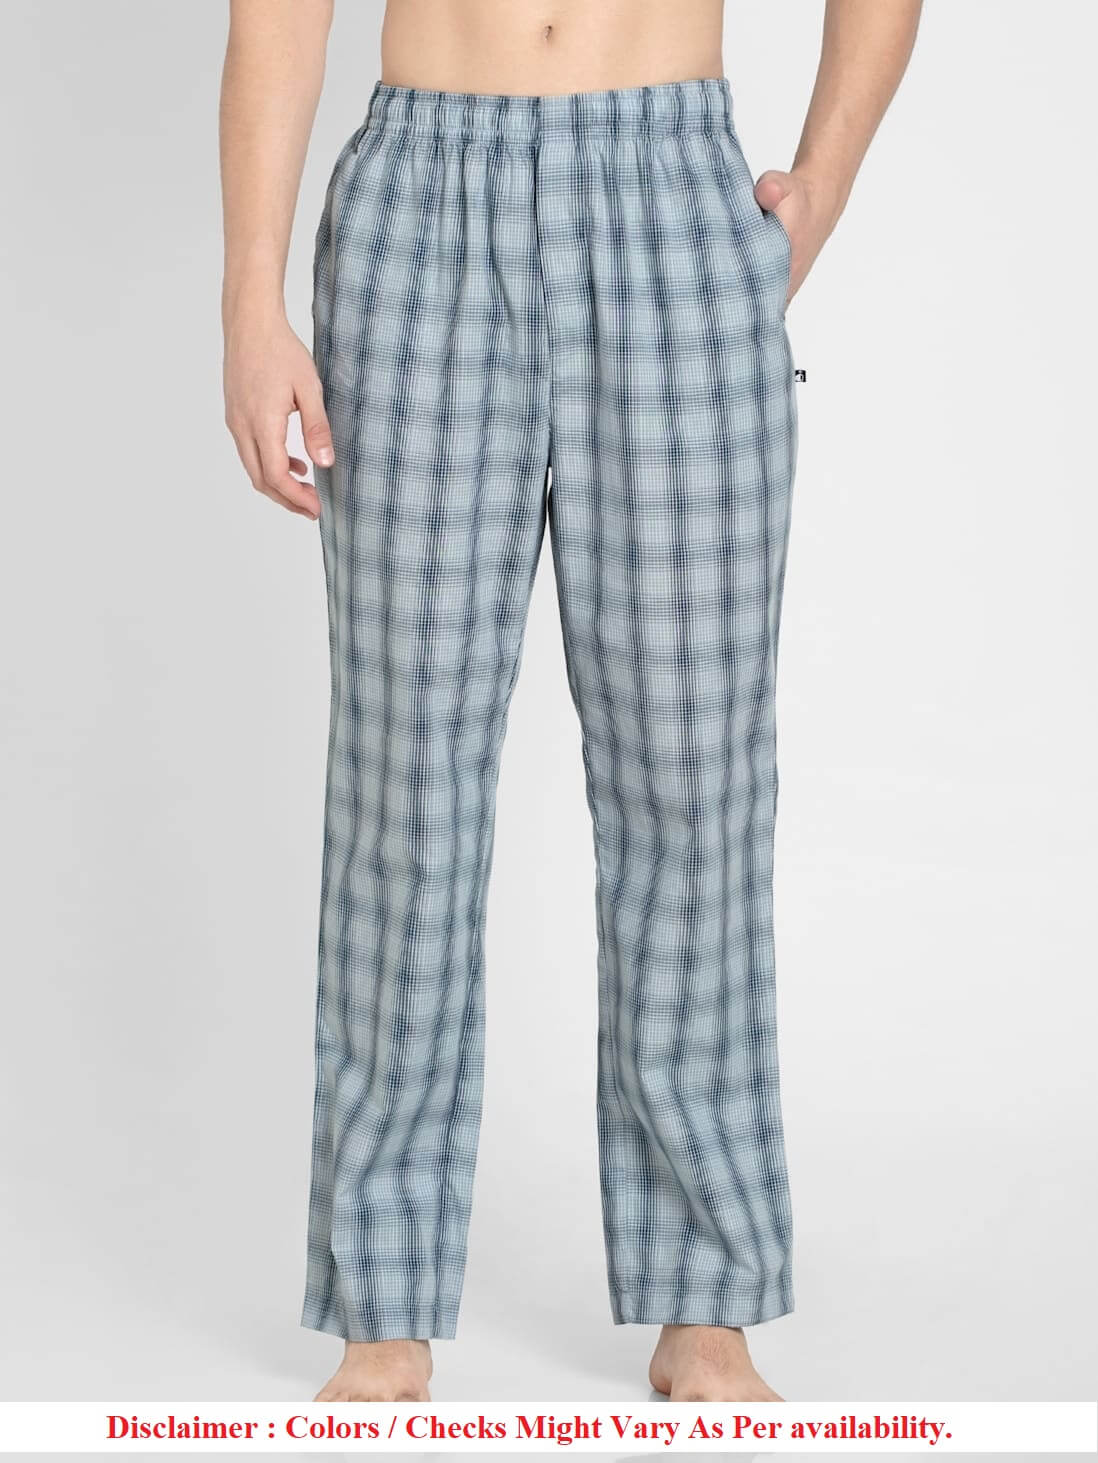 Jockey Men's Flannel Sleep Pant and Jersey Top Pajama Set, Grey/Black/Red,  Medium : Amazon.in: Clothing & Accessories